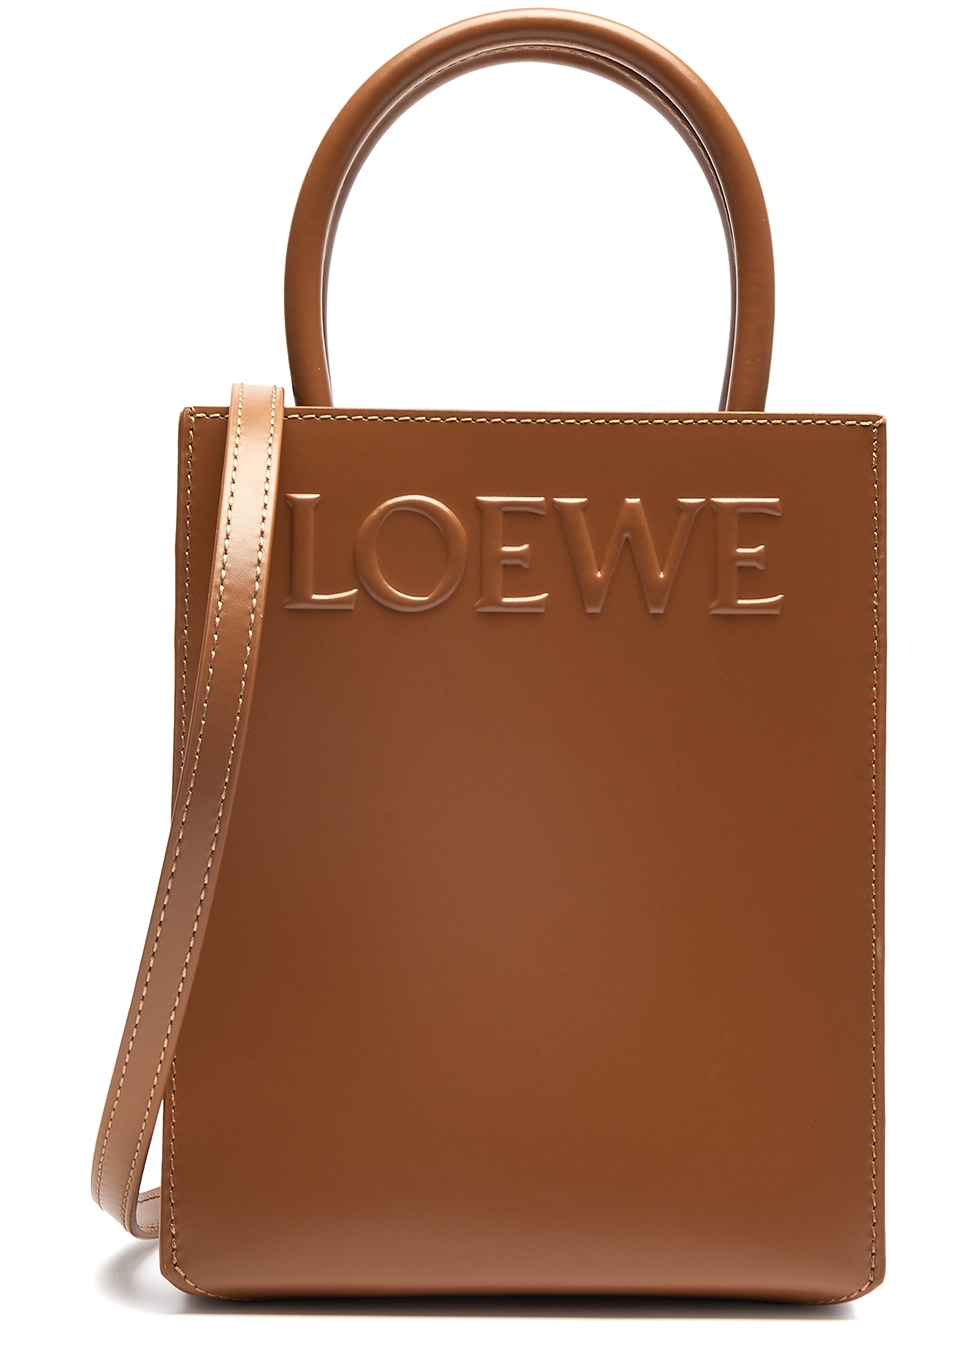 Loewe A5 logo-embossed leather tote - Harvey Nichols